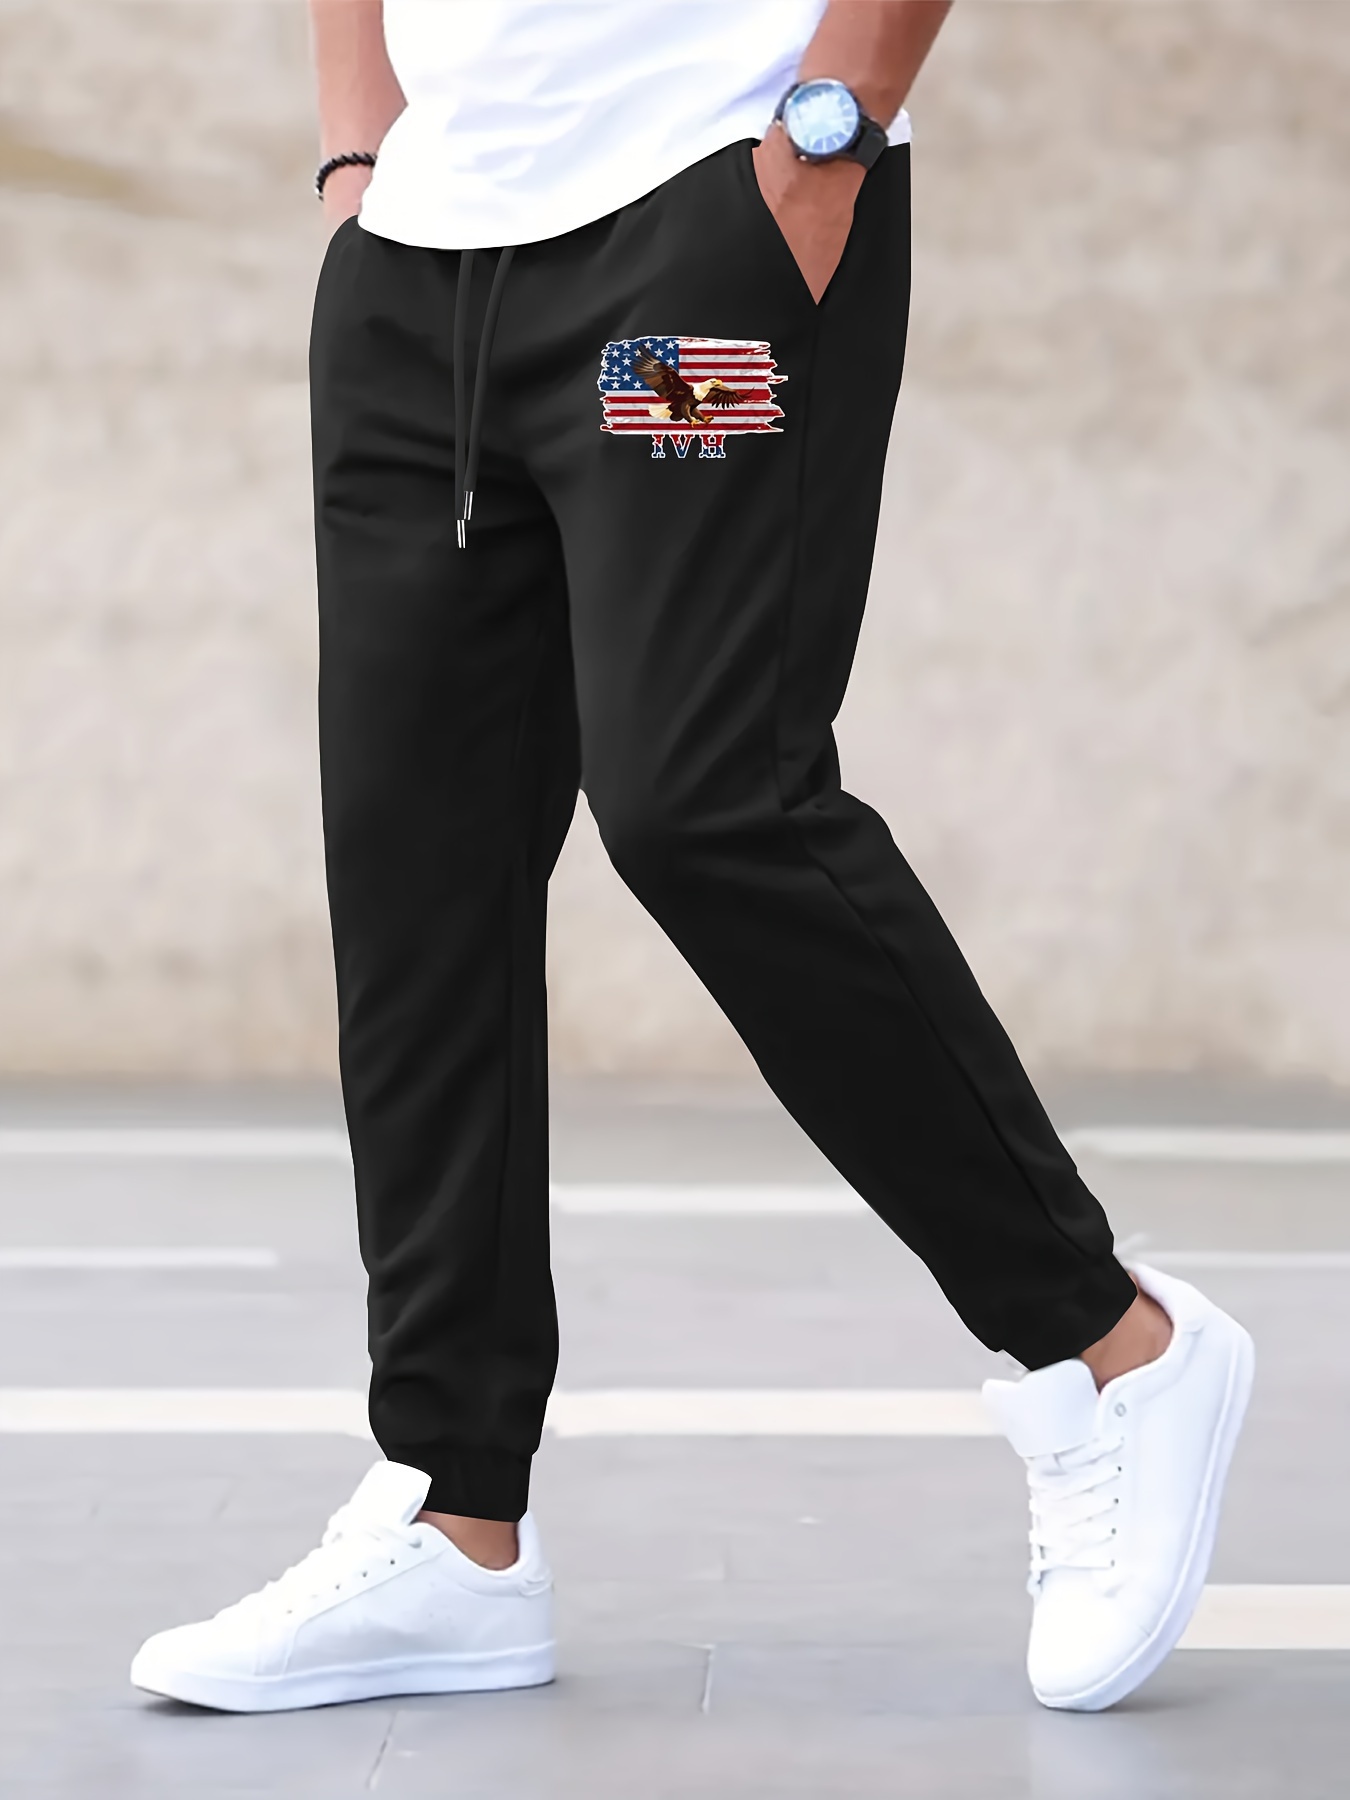 Cargo Trousers for Men UK Clearance,Men's Cargo Pants Hip Hop Techwear  Elastic Waist Harem Pants Stretch Joggers Cuffed Sweatpants with Pockets  Punk Jogging Bottoms Plus Size Black : : Fashion